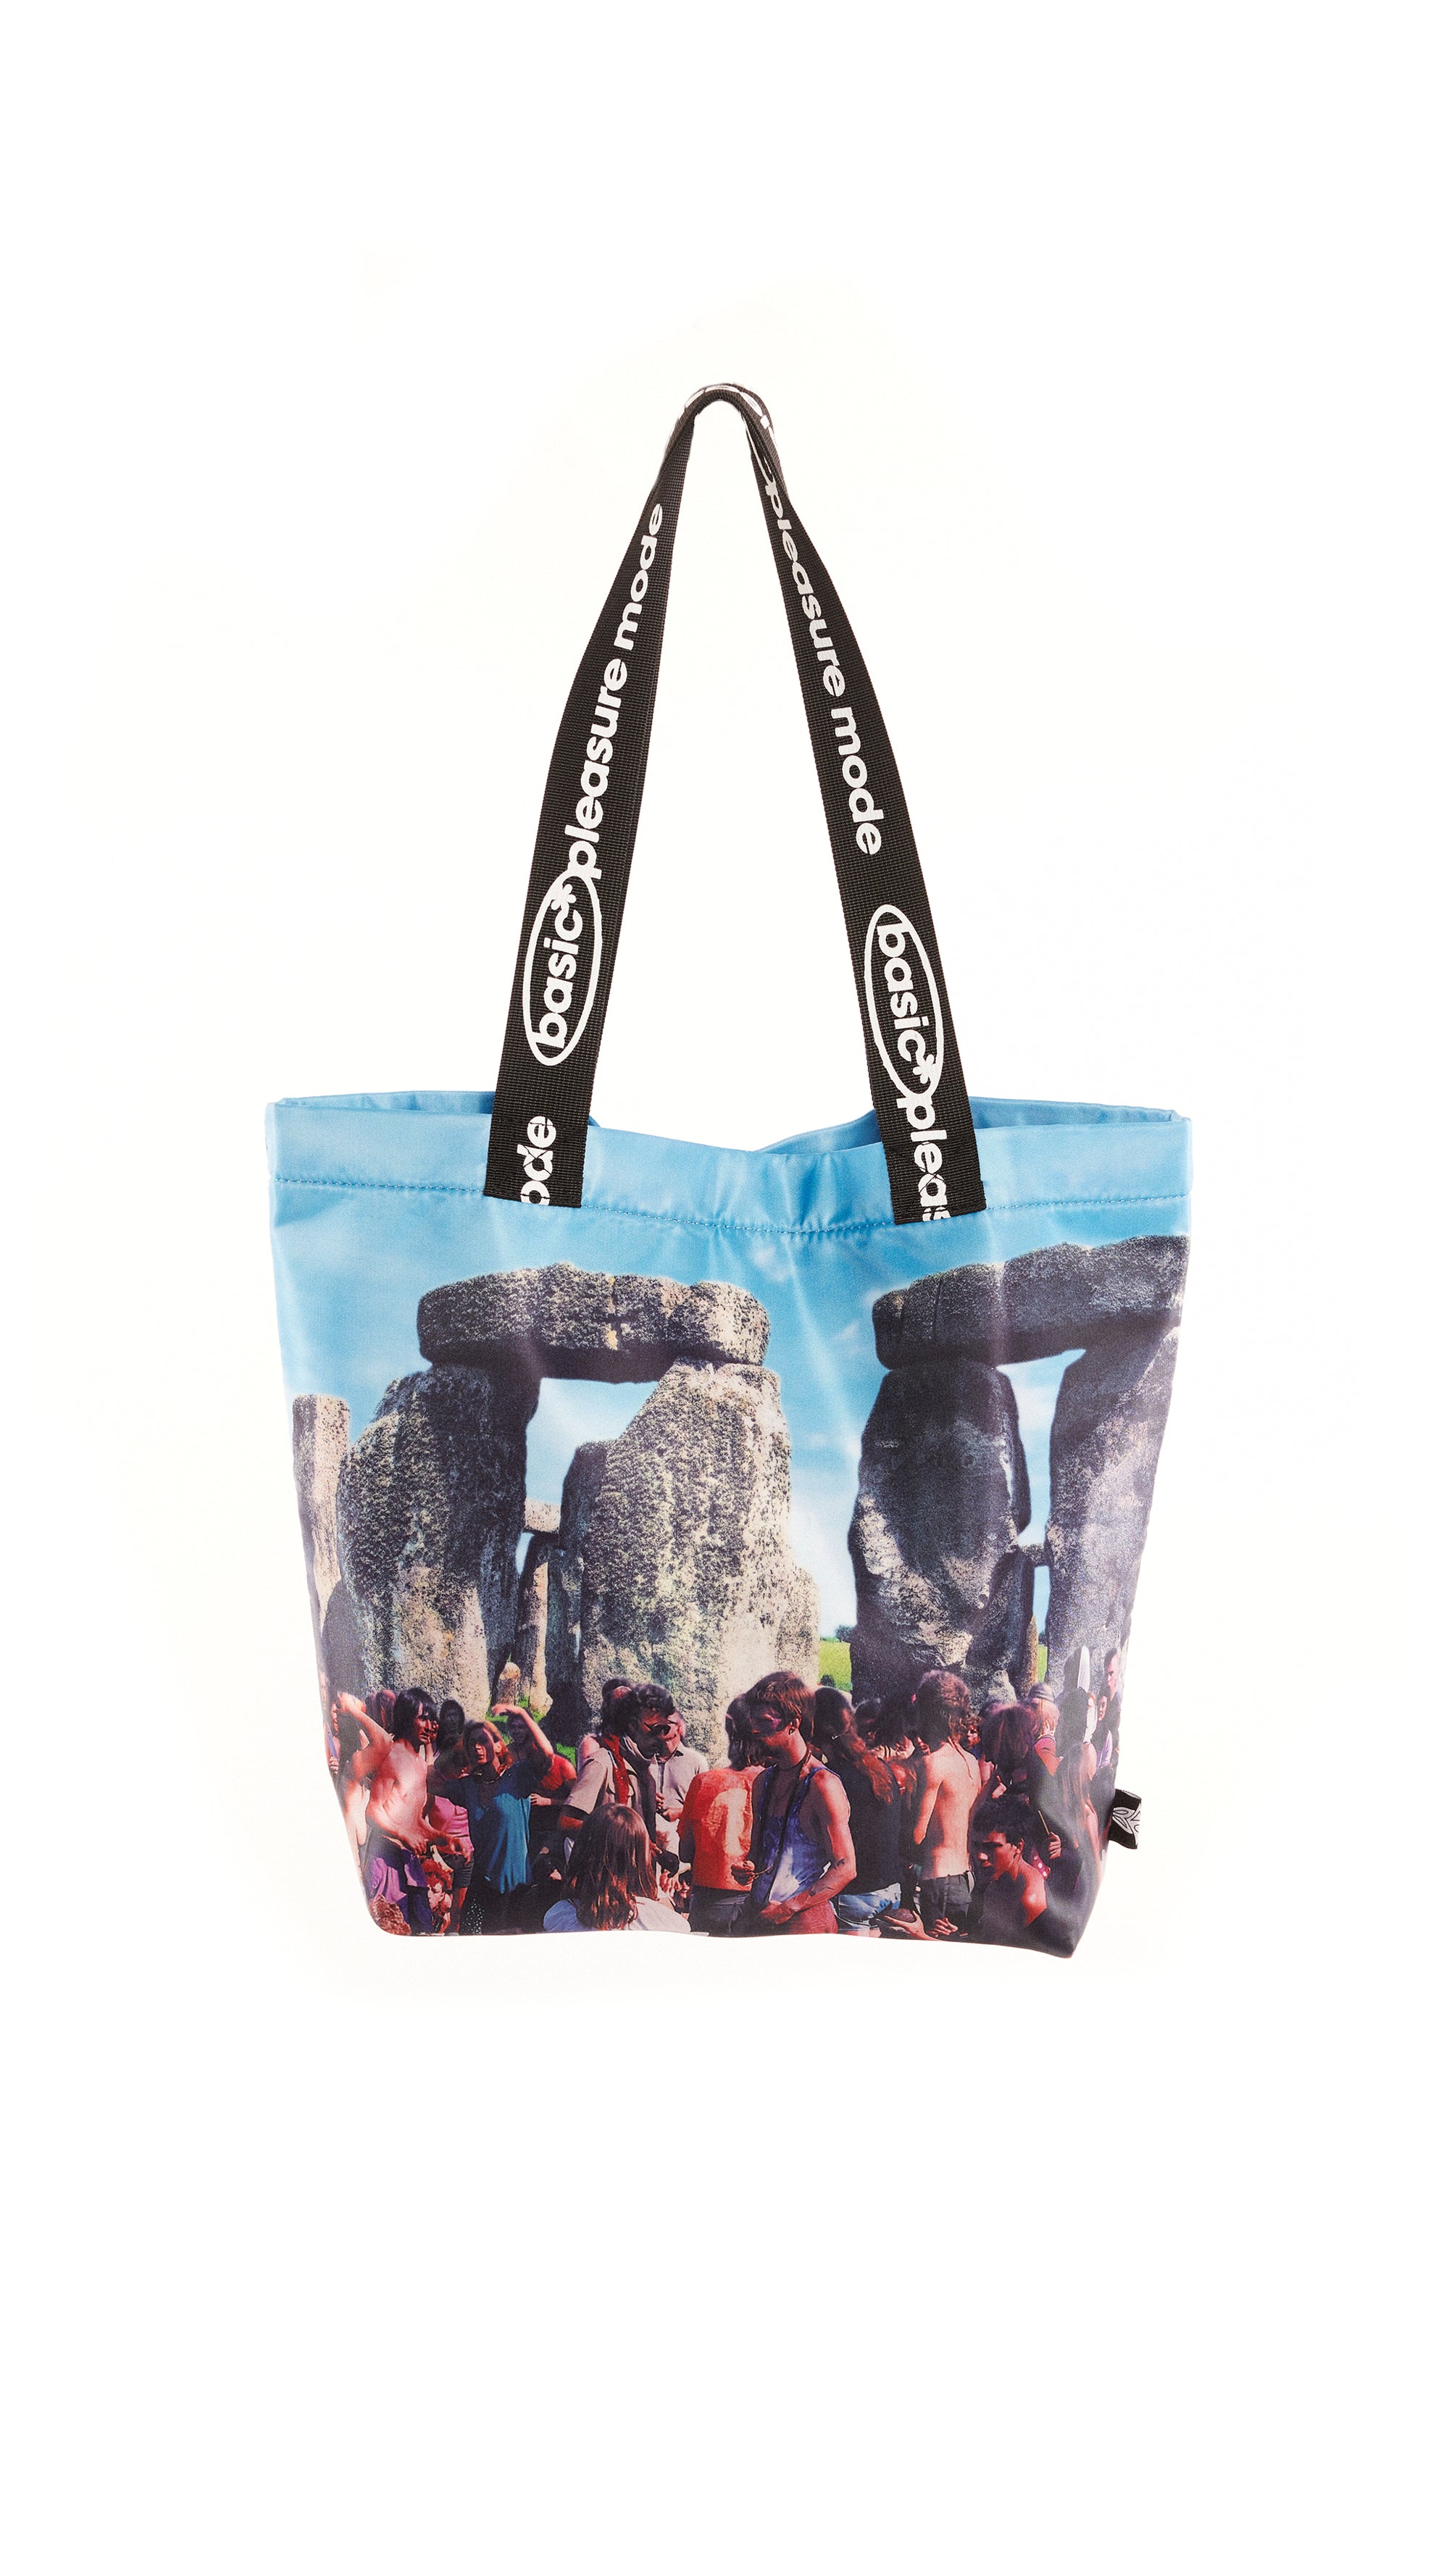 THE ONLY THREE BAG STYLES YOU NEED | Minimalist Handbag Wardrobe Basic  Essential Bag Types - YouTube